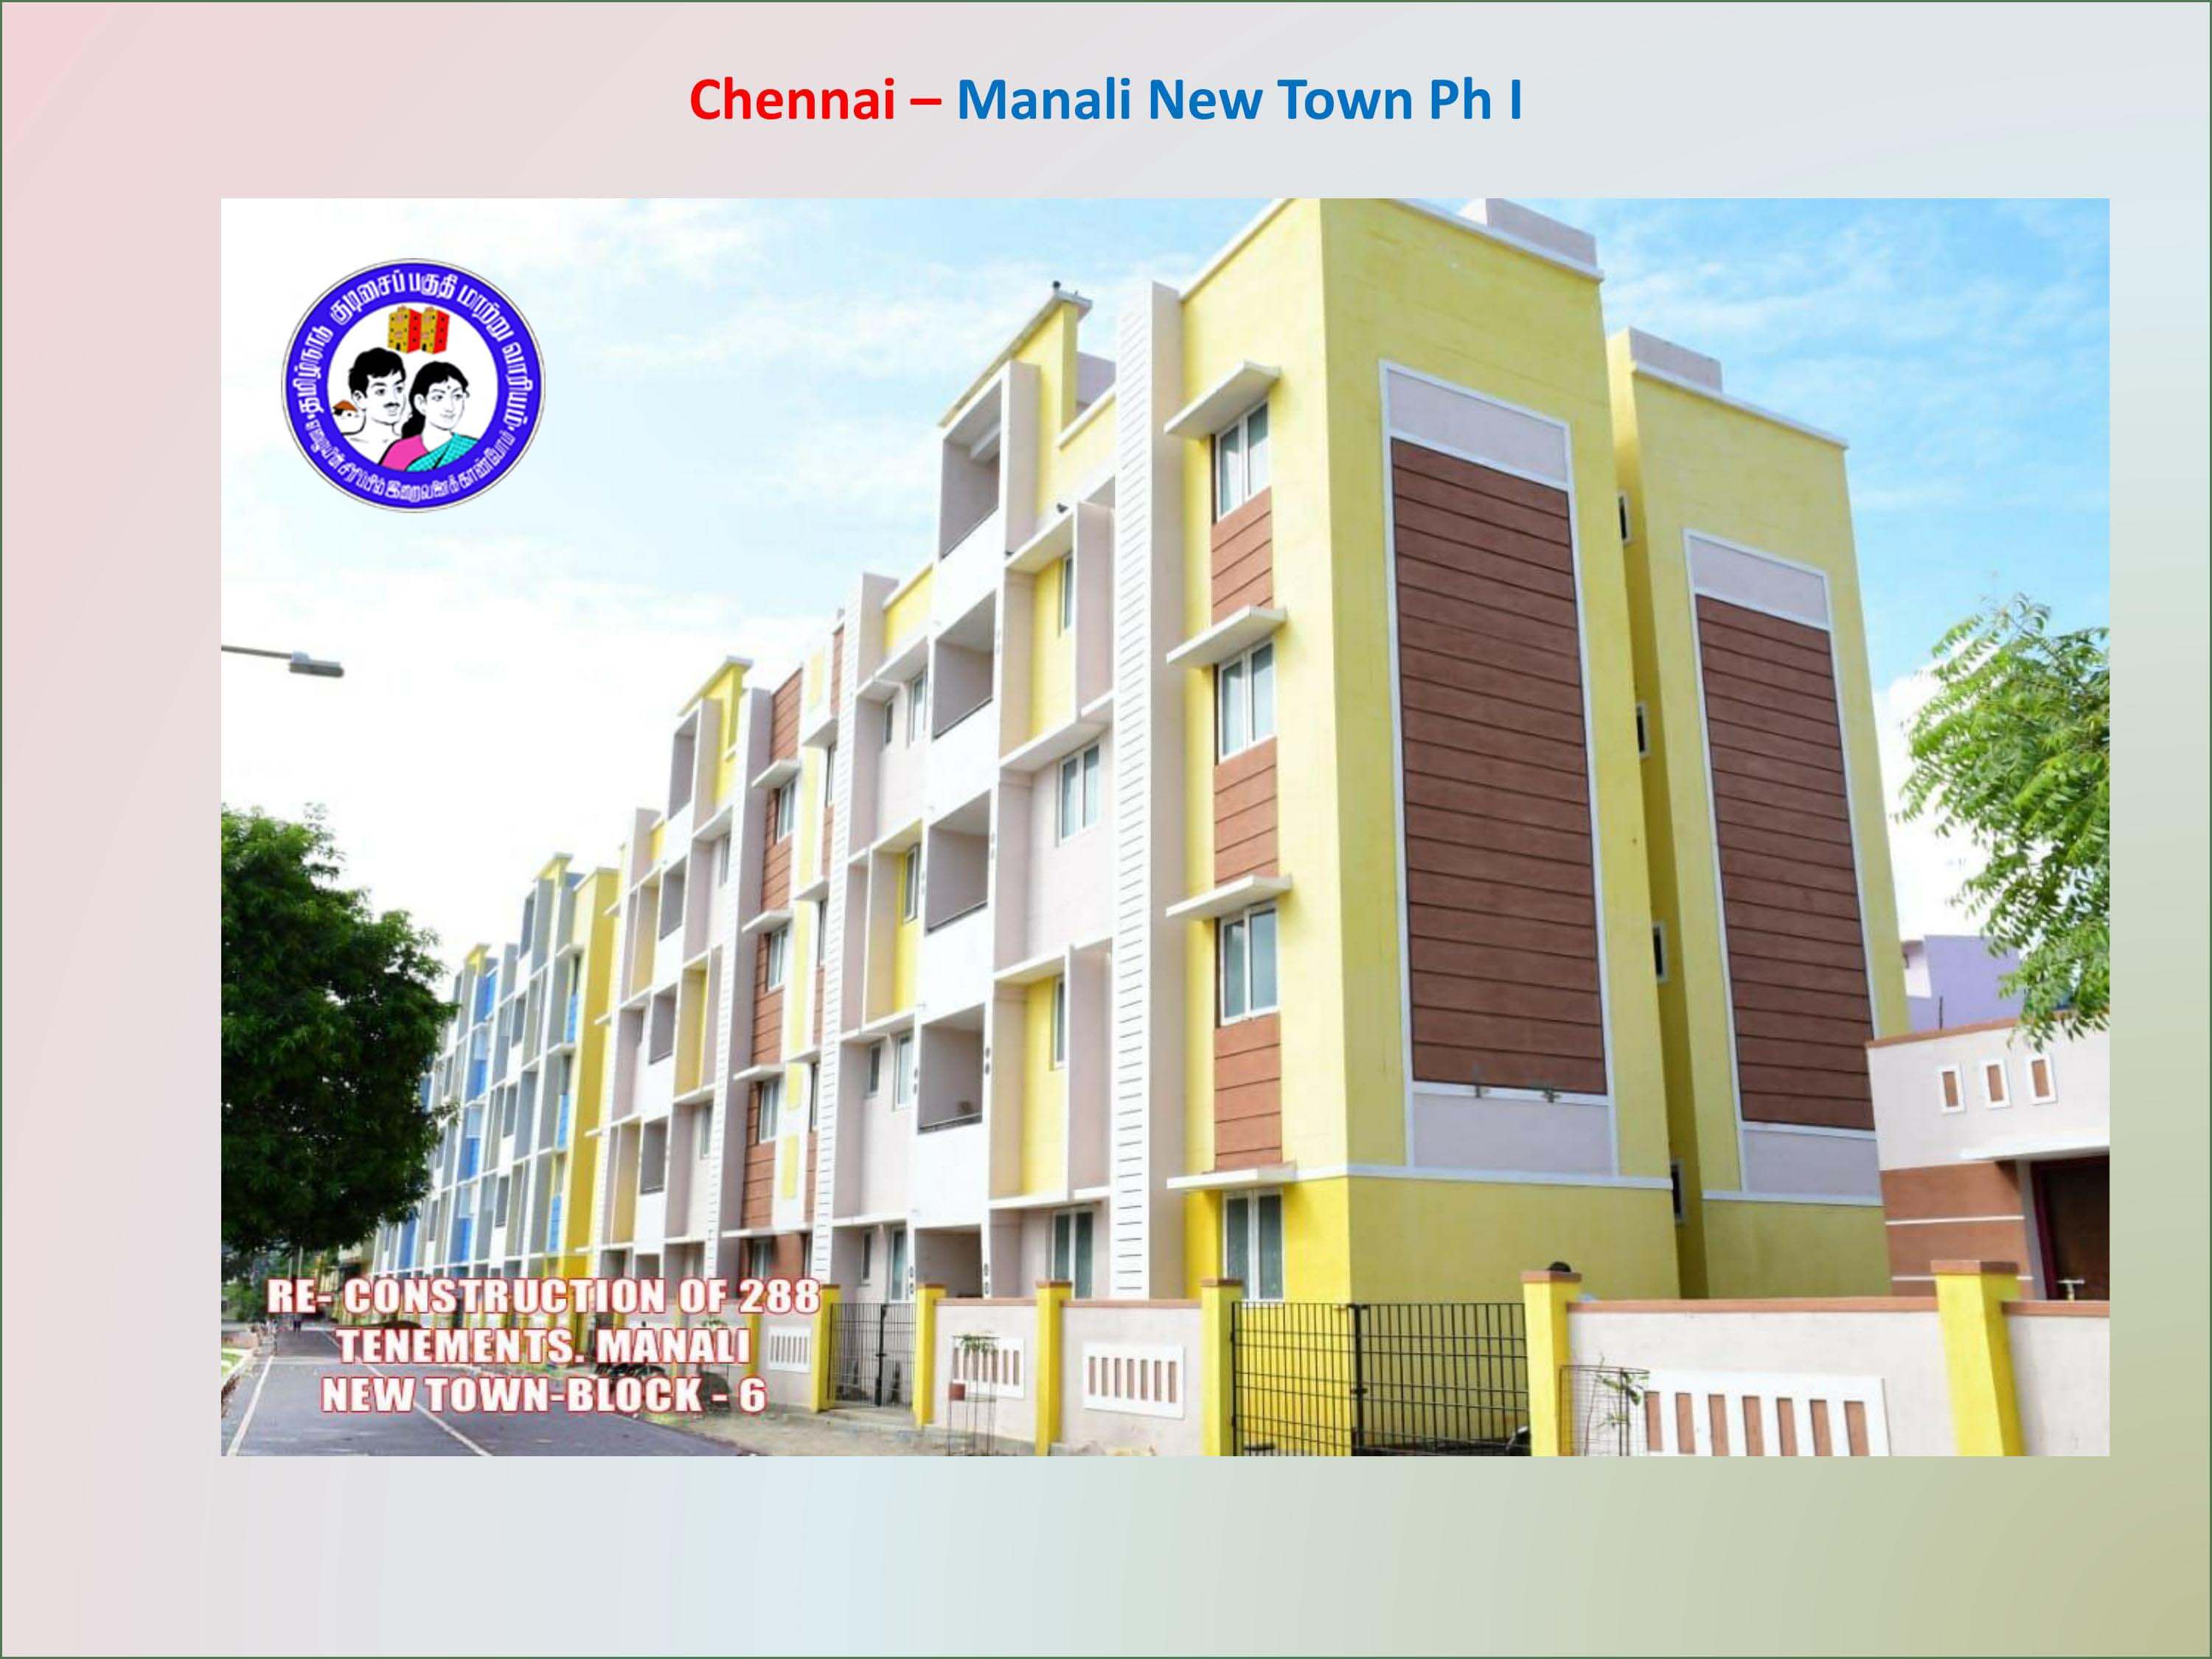 Chennai - Manali New Town Ph I